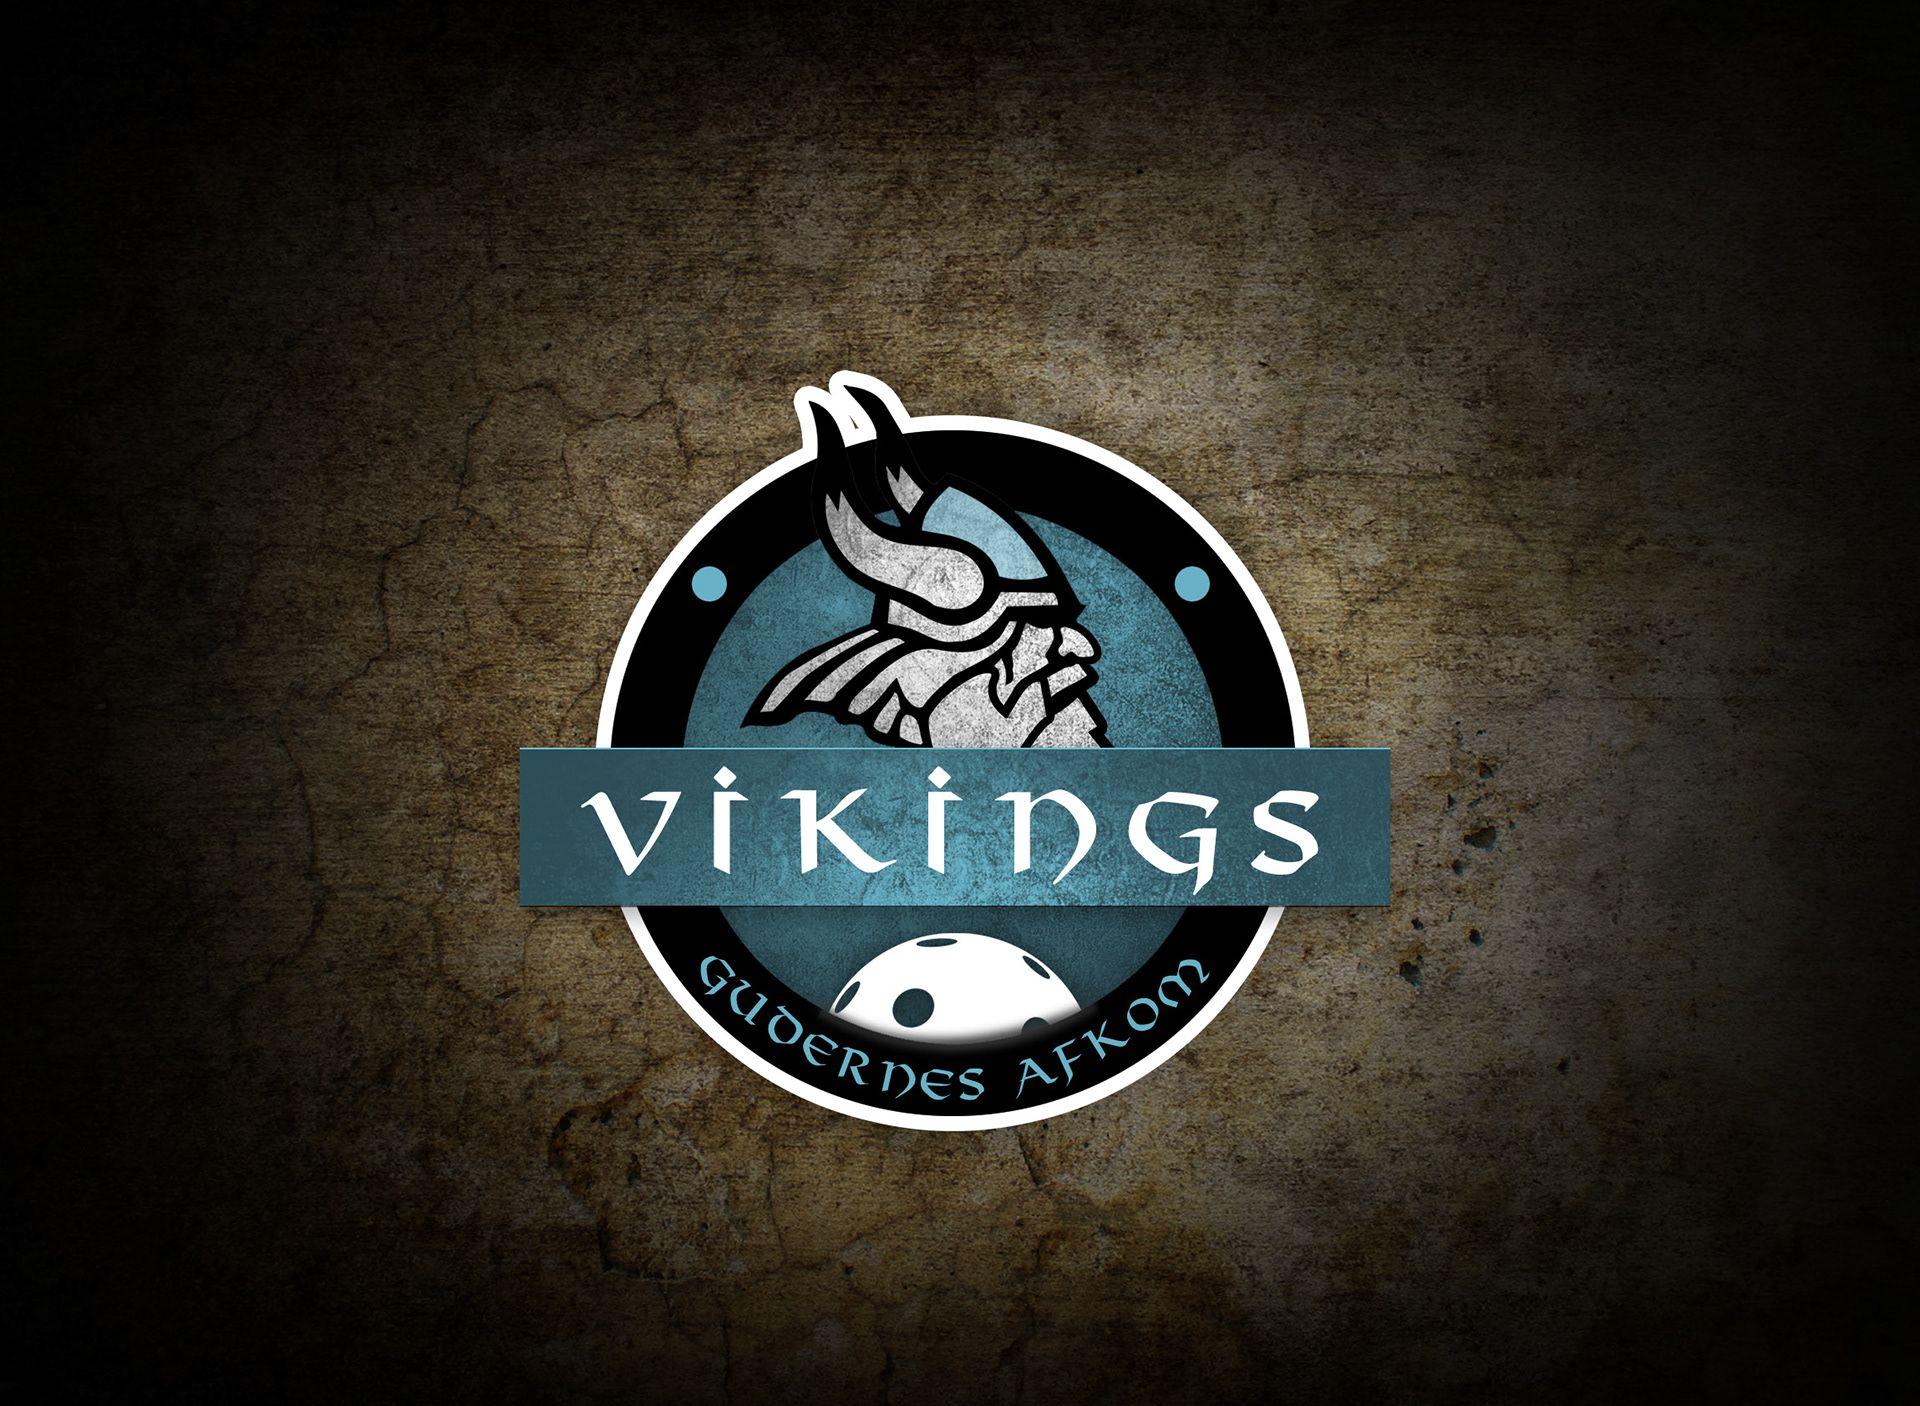 Vikings New Logo - behumbl - Jakob Sjelle, digital Art director/designer - Vikings ...